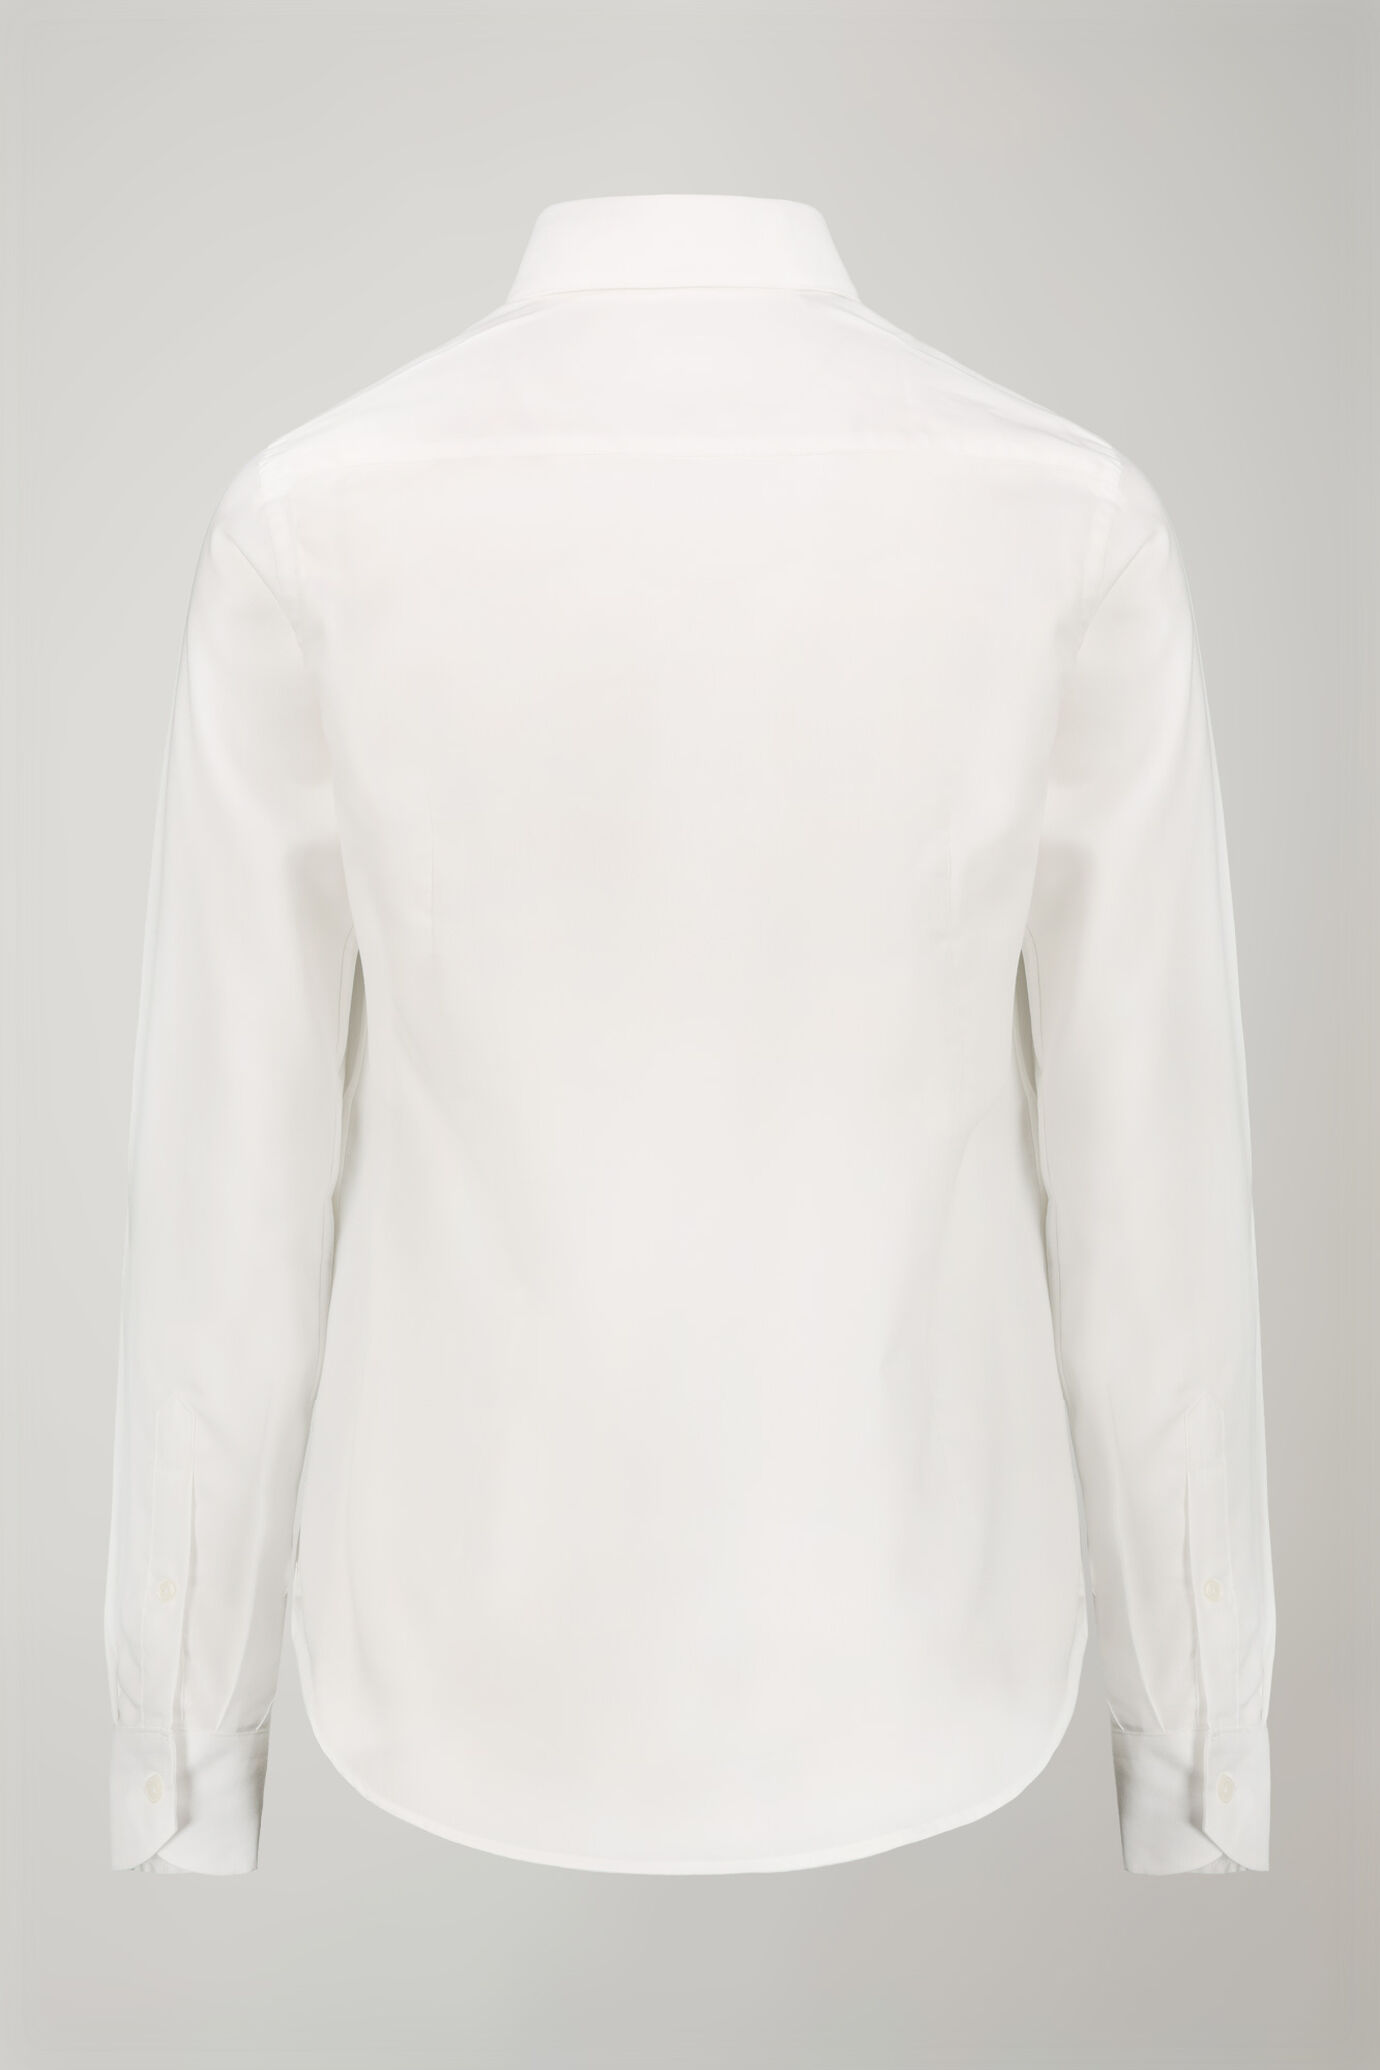 Men's shirt classic collar 100% cotton pinpoint fabric plain regualr fit image number 6